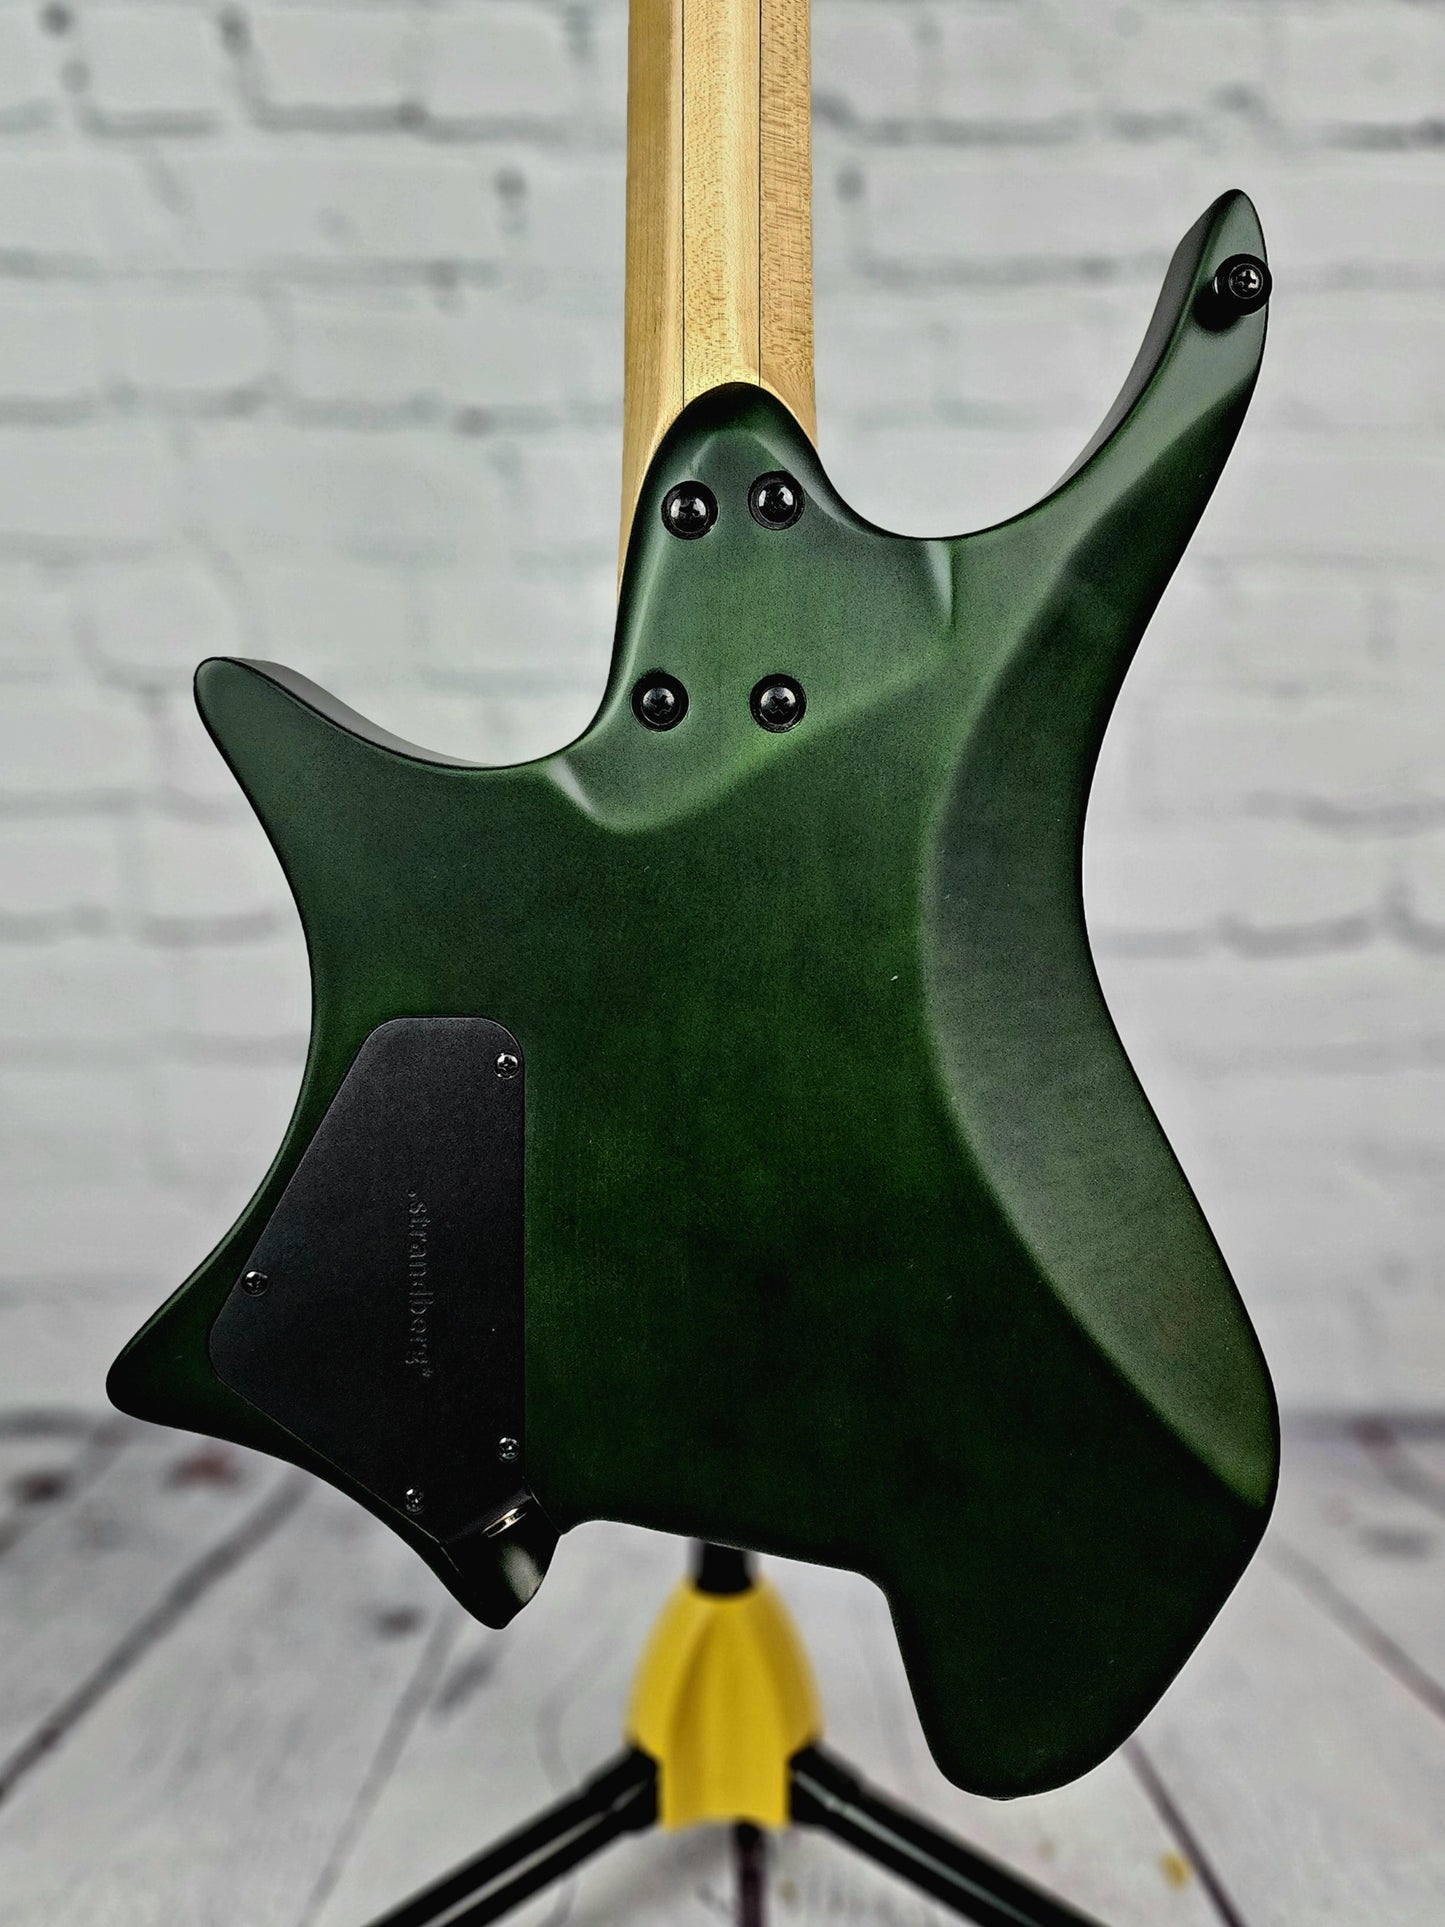 Strandberg Boden Standard NX 6 String HH Hardtail Electric Guitar Trans Green